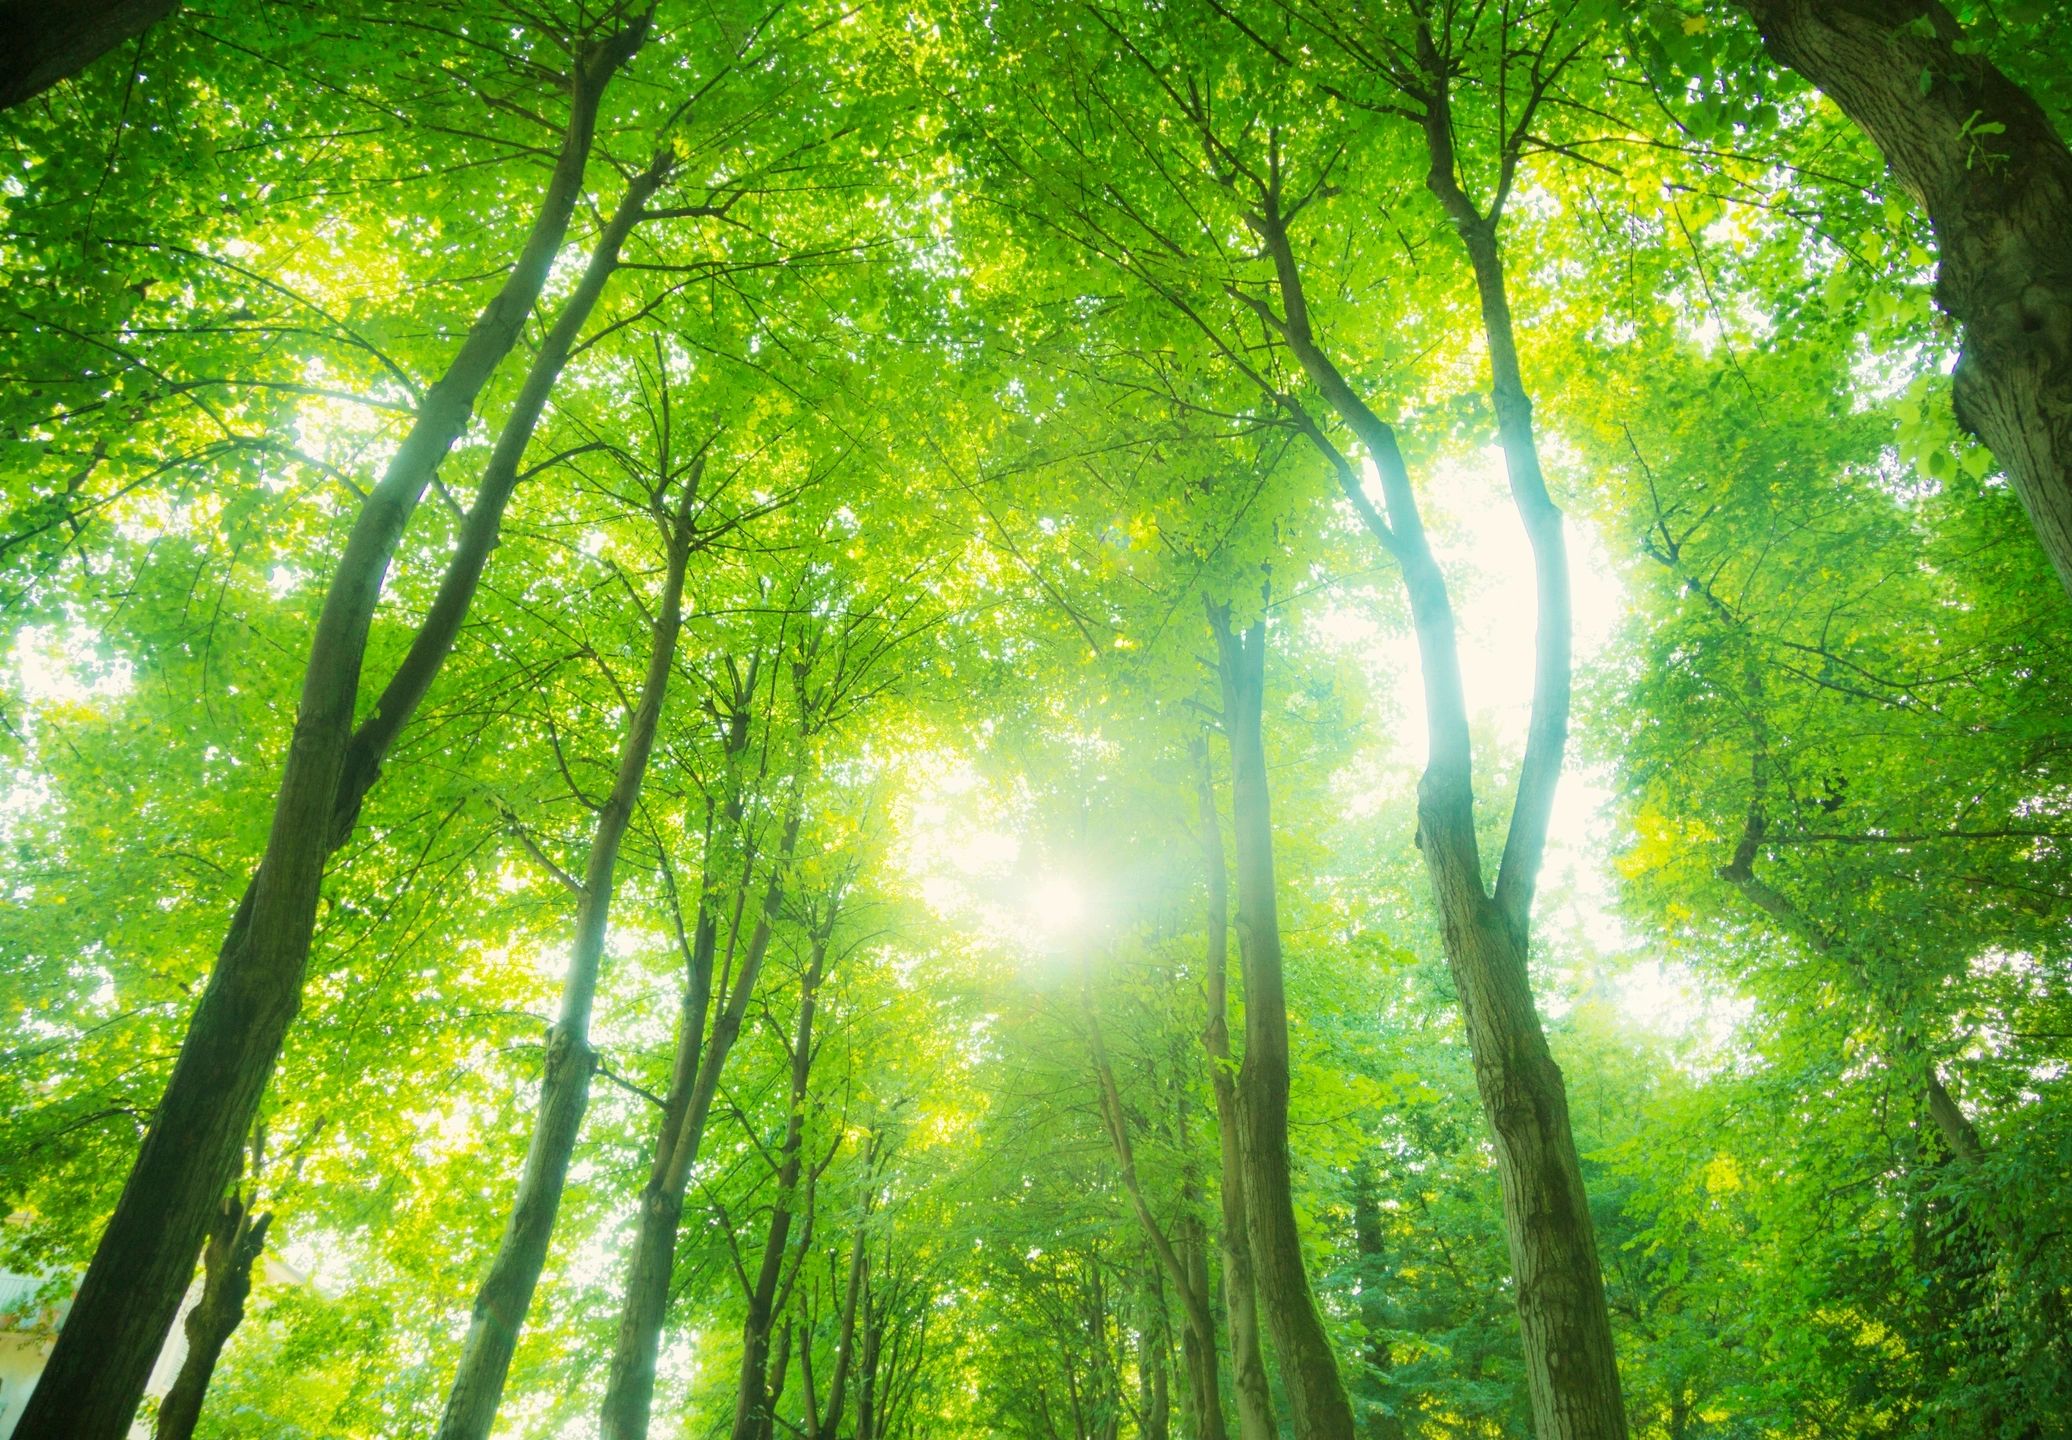 Sunlight shining through leafy treetops